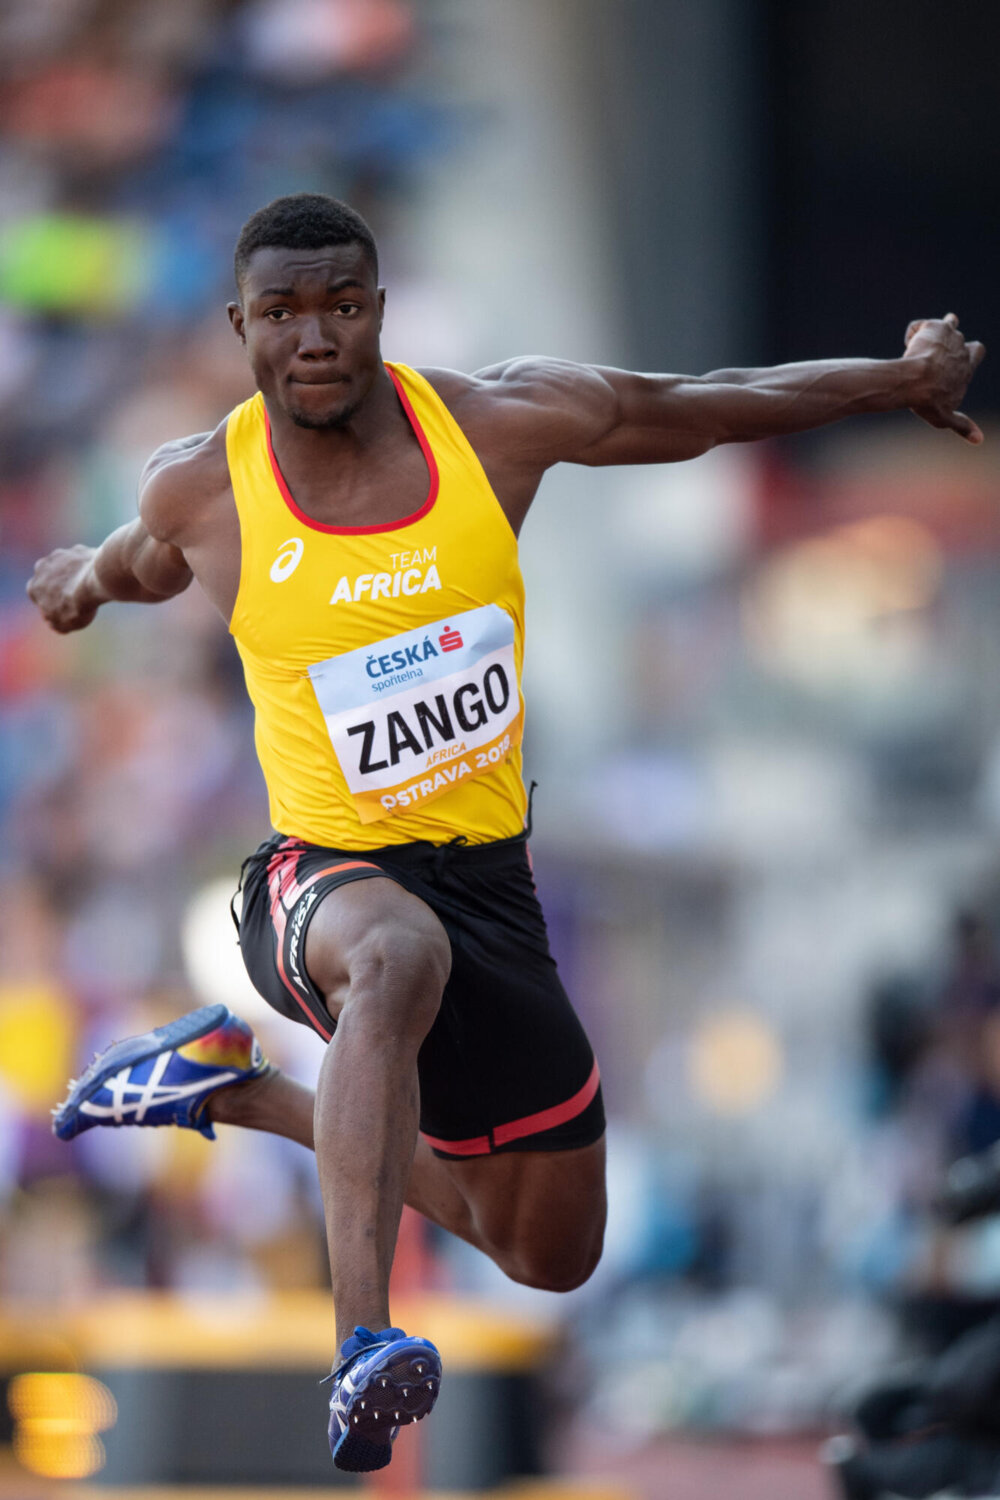 Africký rekordman cílí na 18 metrů